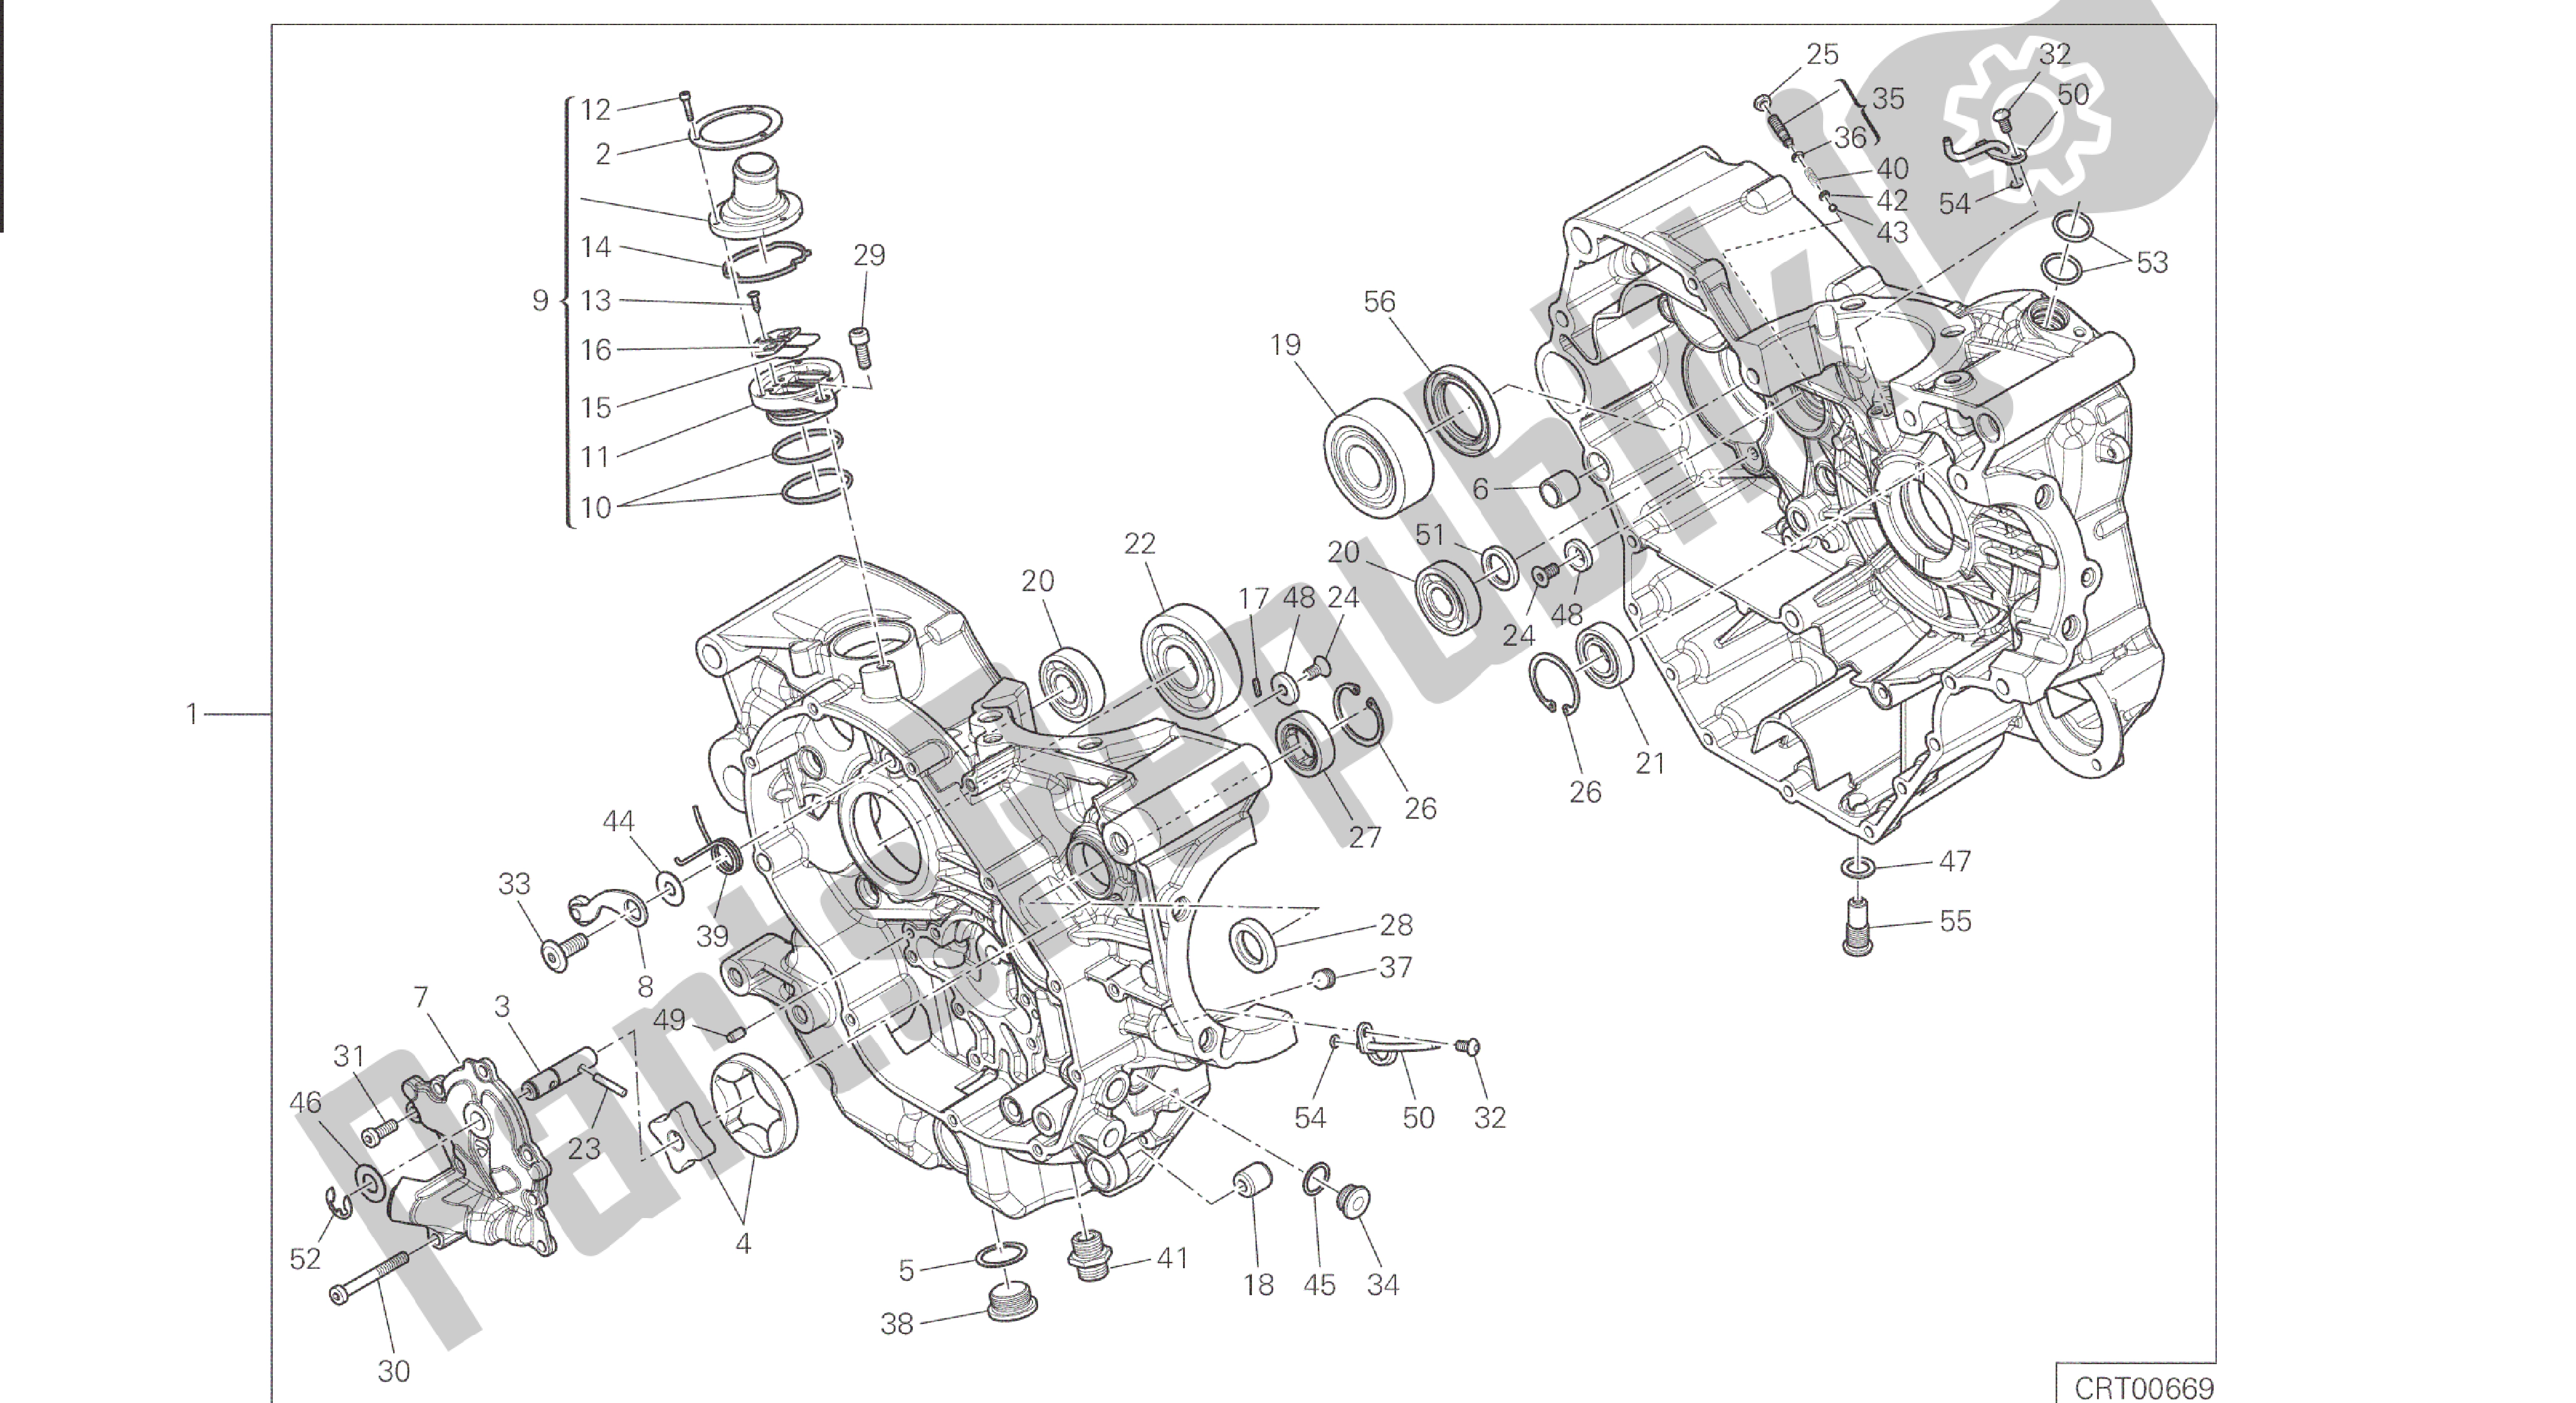 Todas las partes para Dibujo 010 - Motor De Grupo Par Medio Cárter [mod: M 821] de Ducati Monster 821 2015